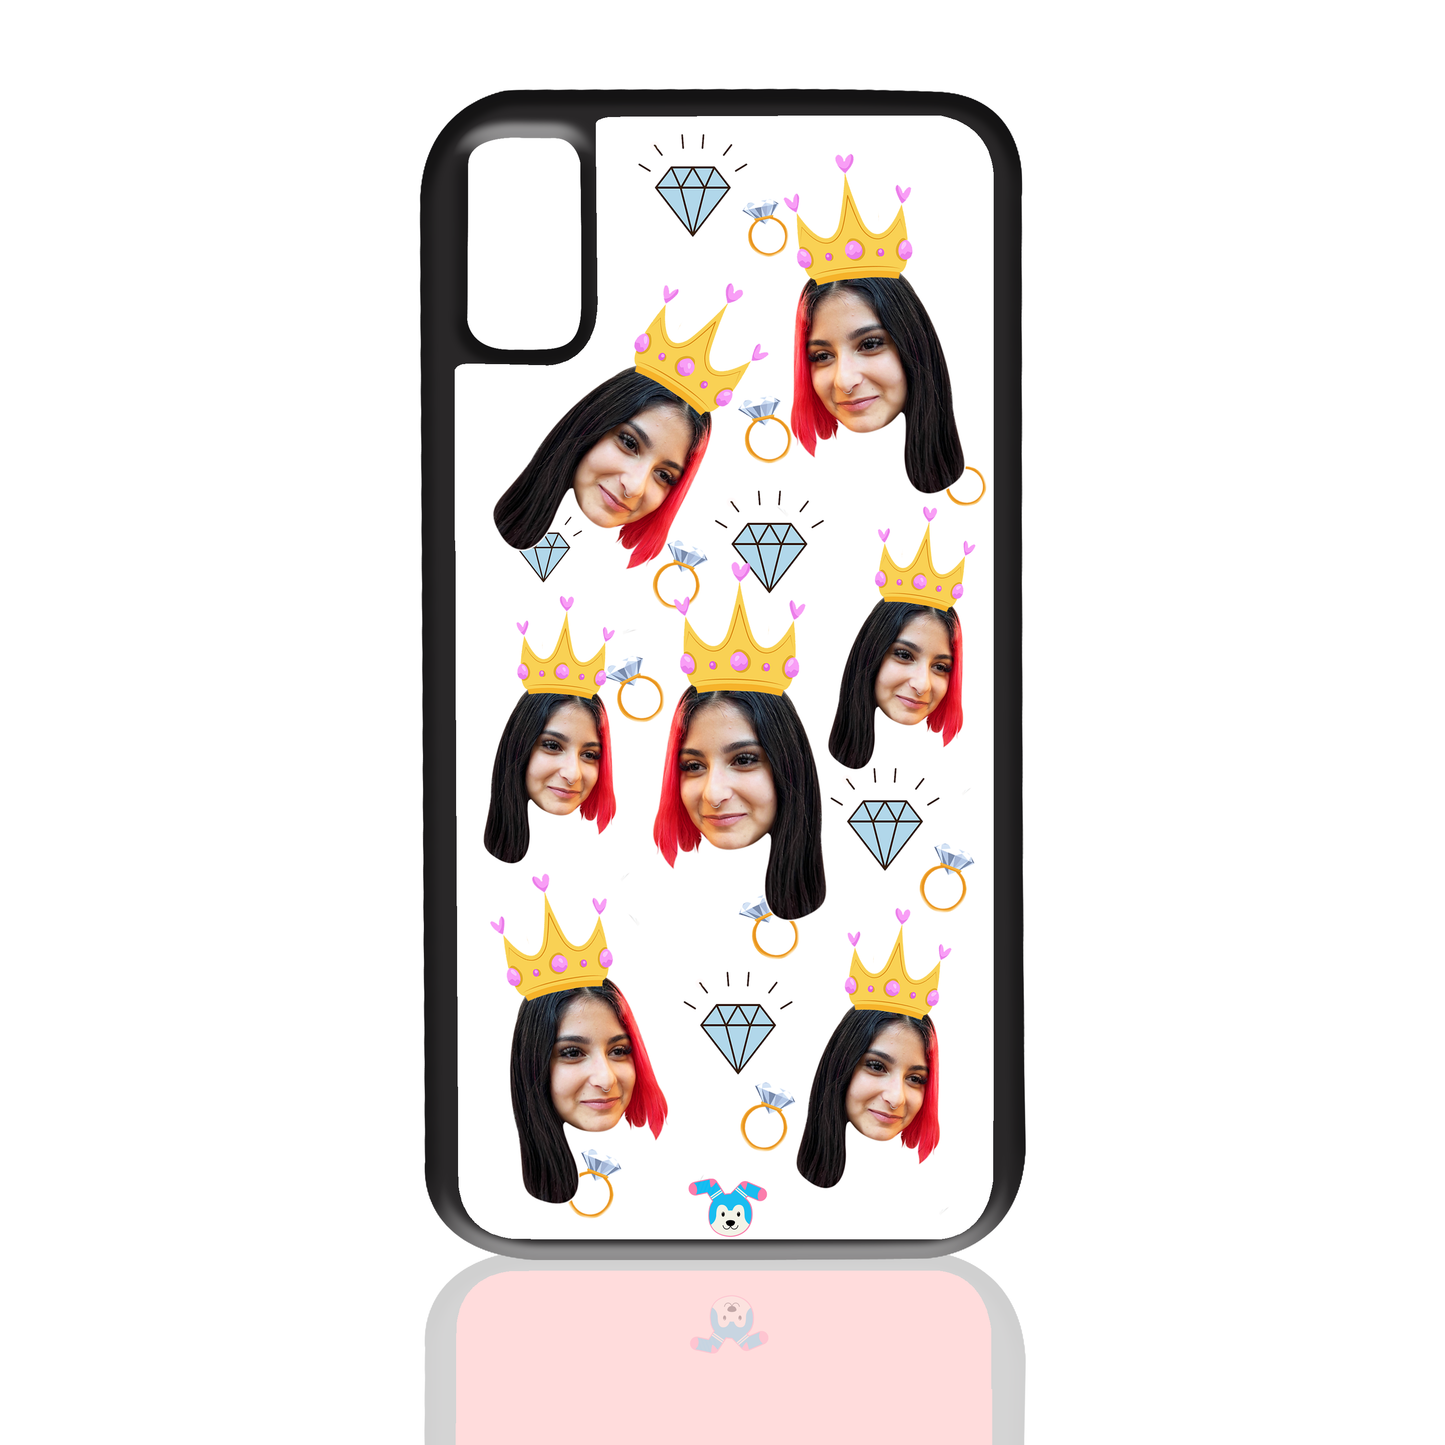 Princess Phone Case